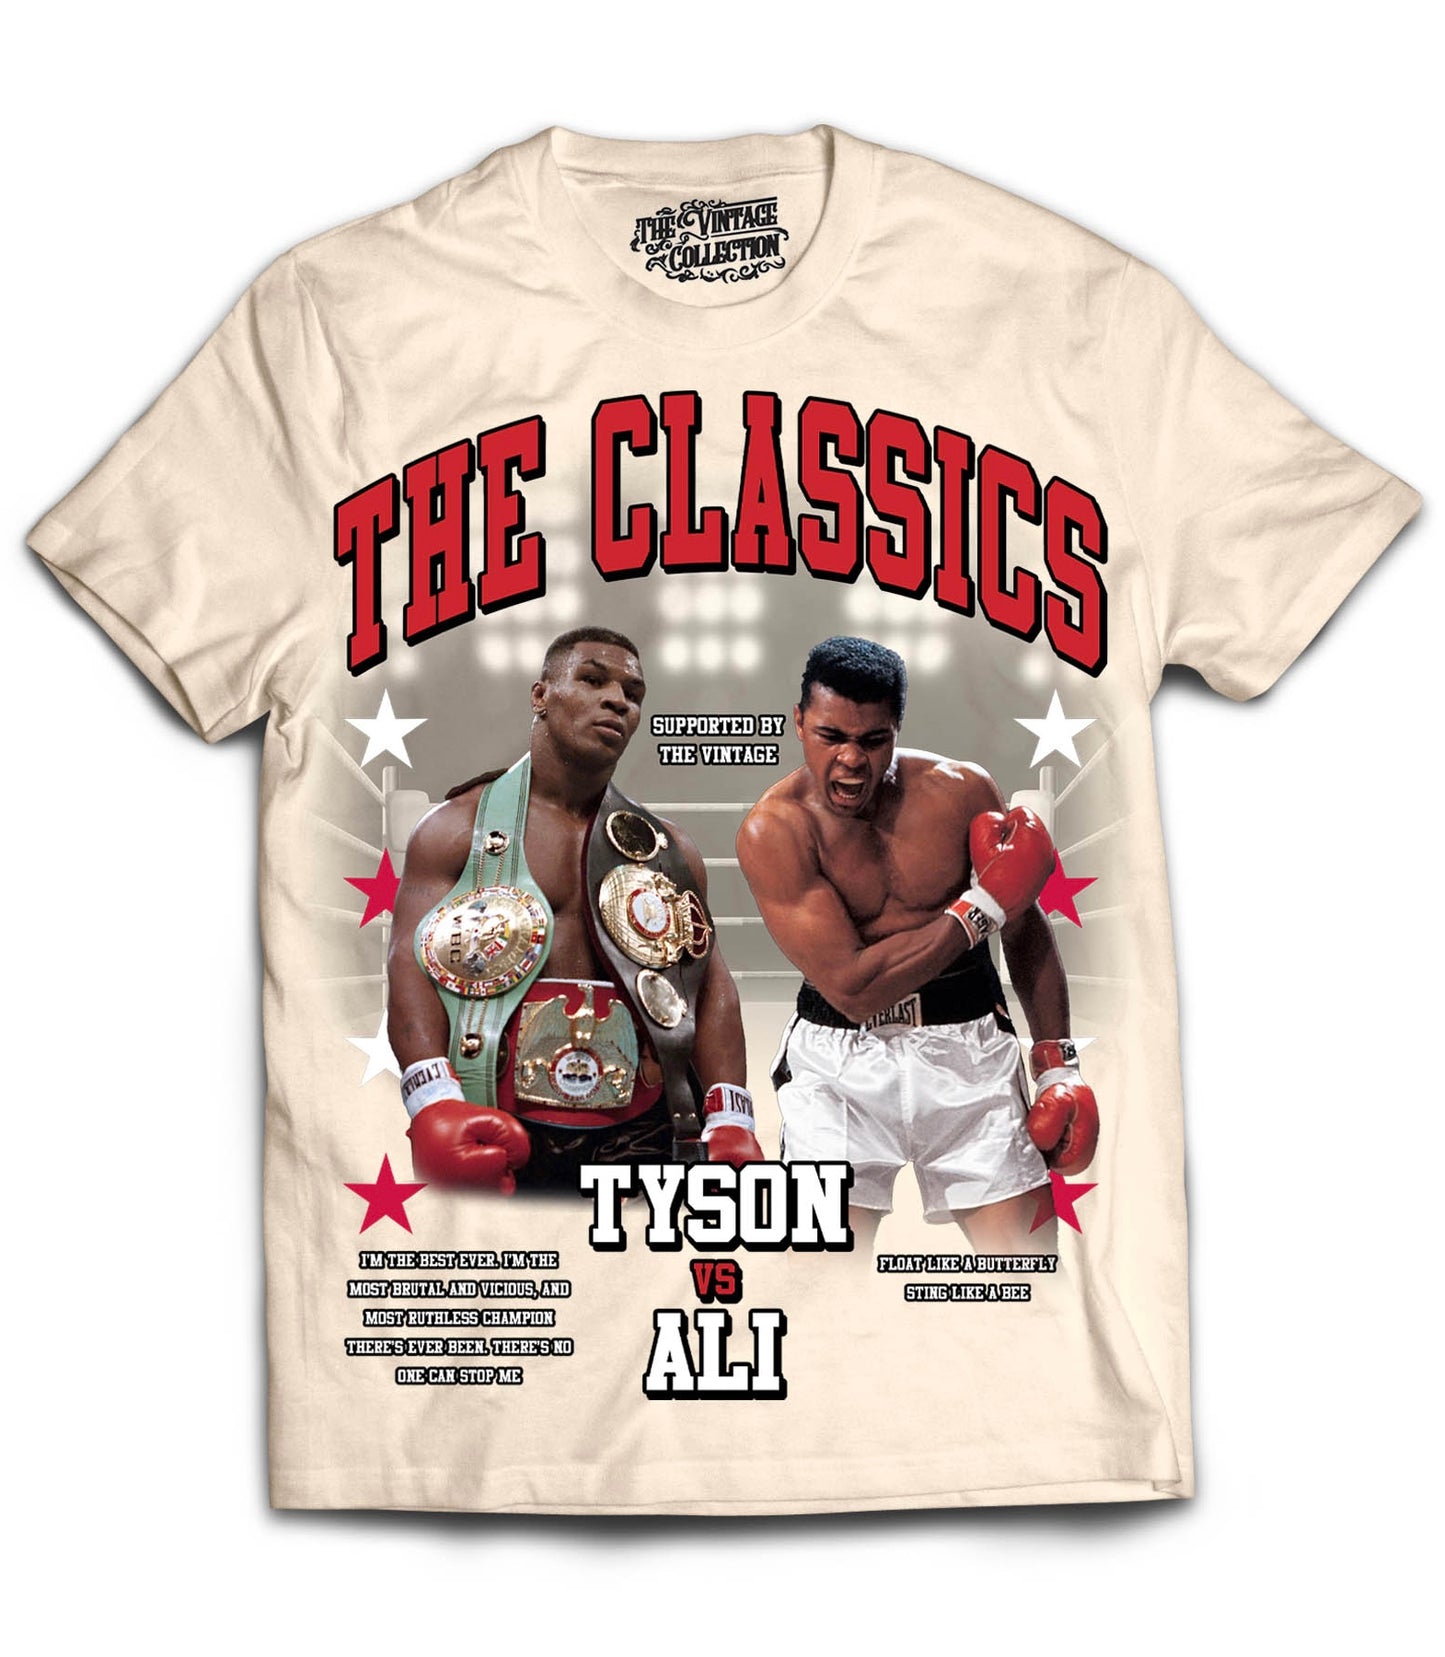 The Classics Tribute Shirt (Cream)